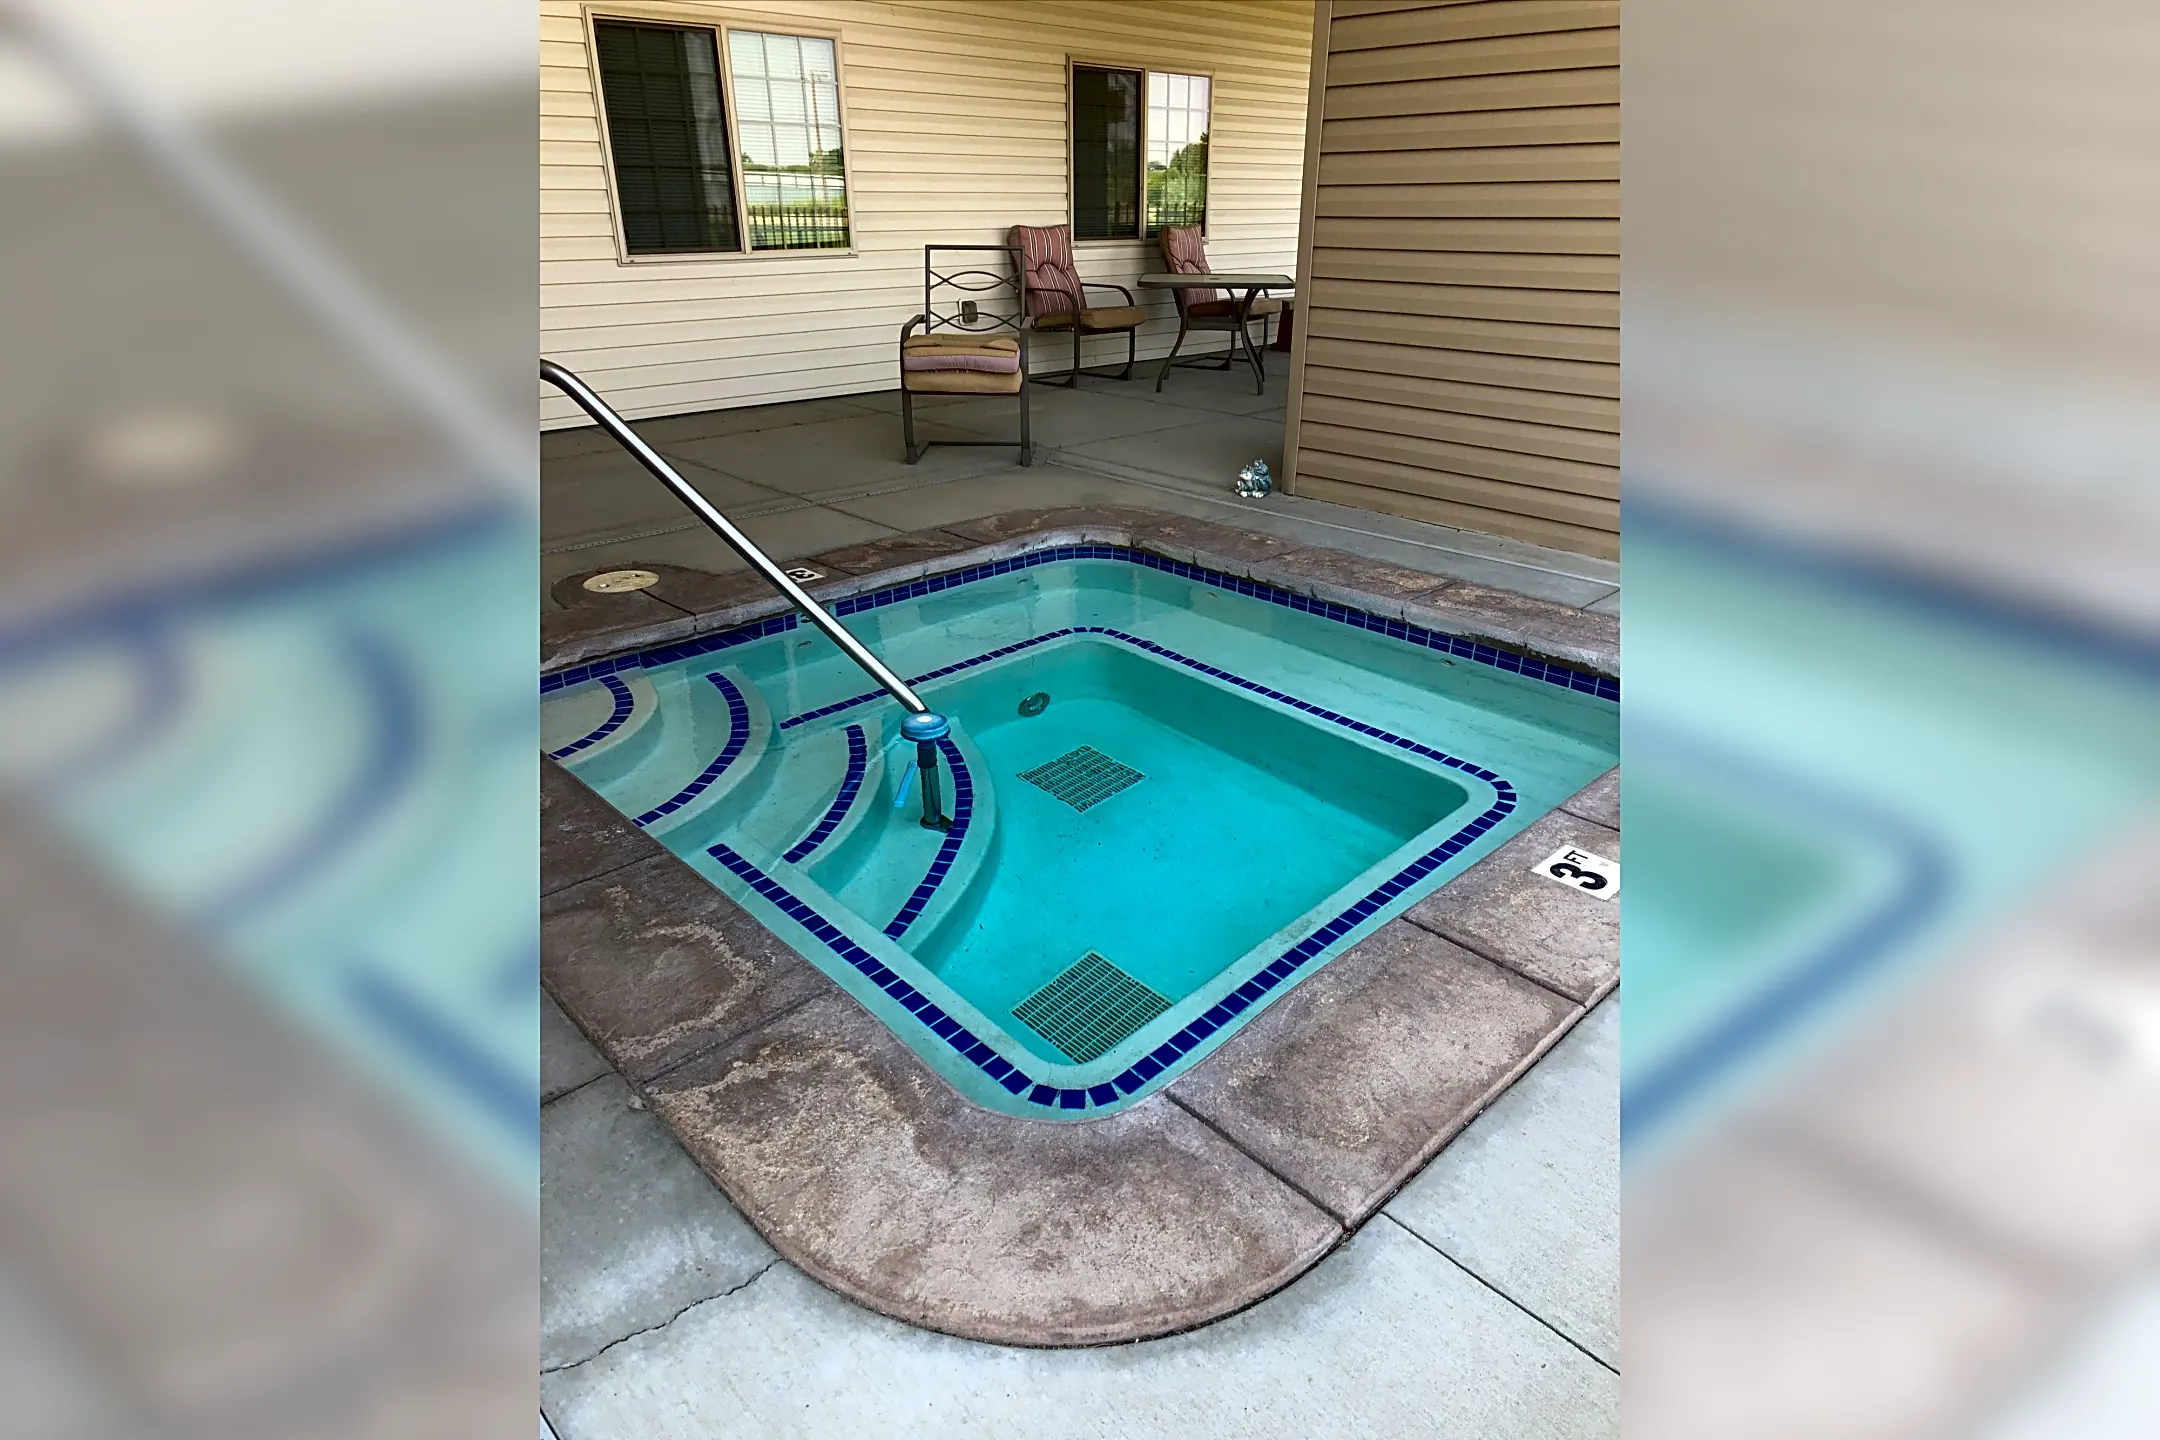 Pool - Vineyard Suites A Smoke Free 55 Community - Caldwell, ID